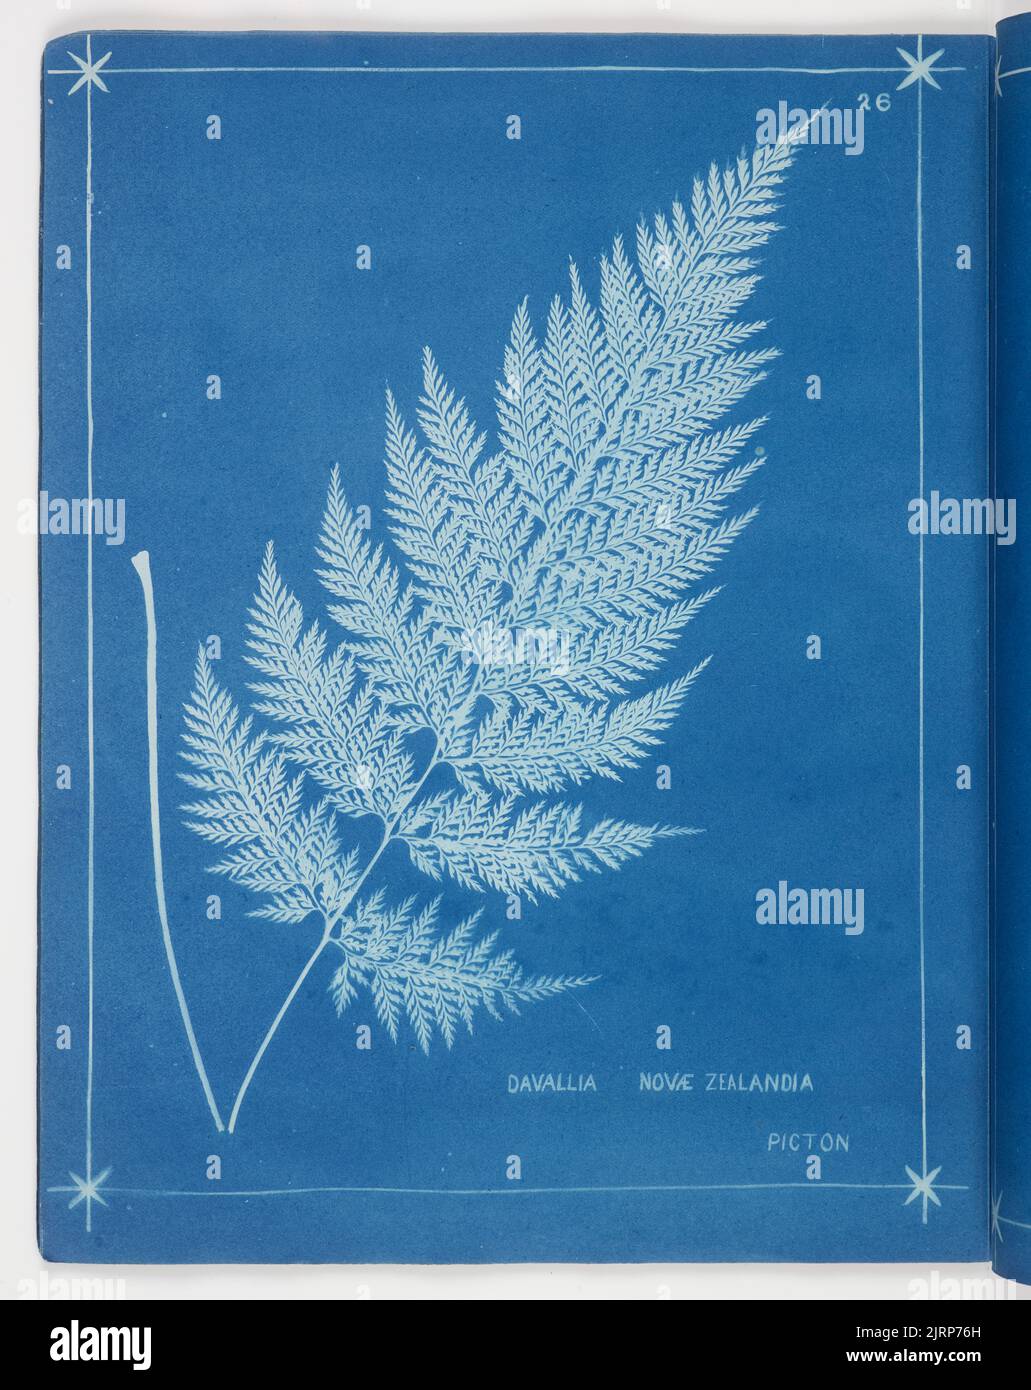 Davallia Novae Zealandia. From the album: New Zealand ferns. 148 varieties, 1880, Auckland, by Herbert Dobbie. Stock Photo